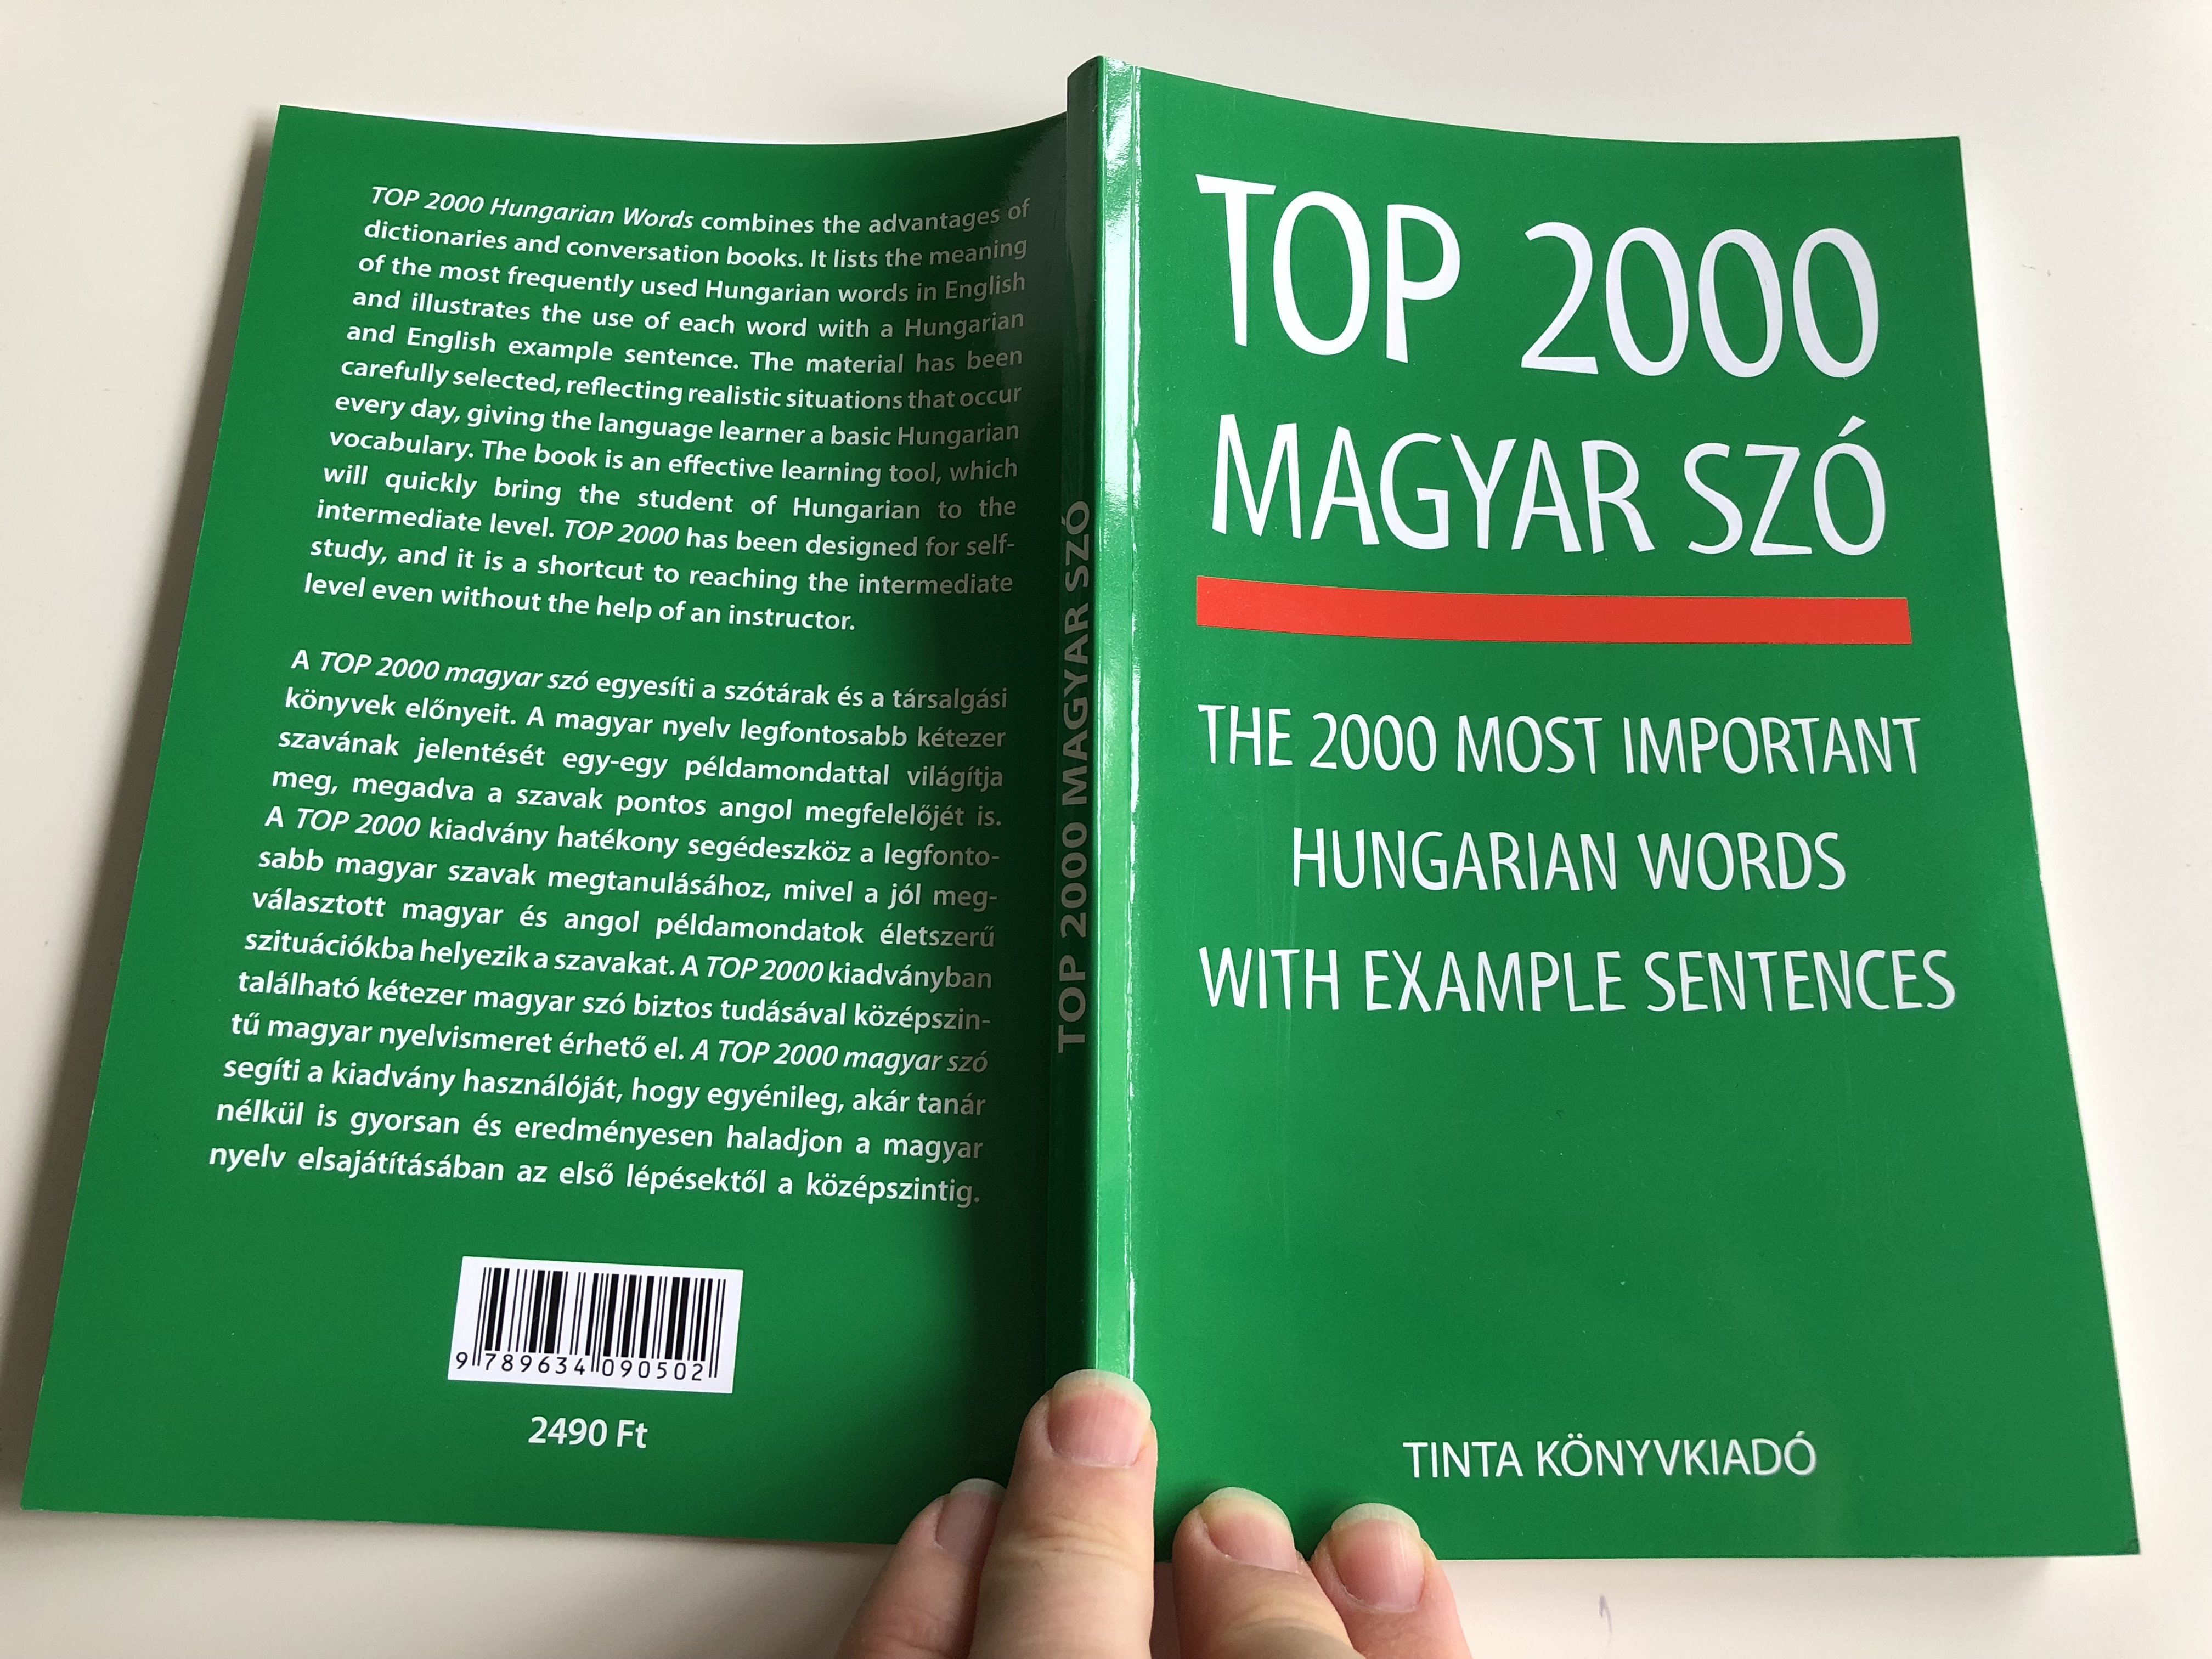 top-2000-magyar-sz-by-kiss-zsuzsanna-the-2000-most-important-hungarian-words-with-example-sentences-tinta-k-nyvkiad-2017-series-editor-viola-temesi-13-.jpg